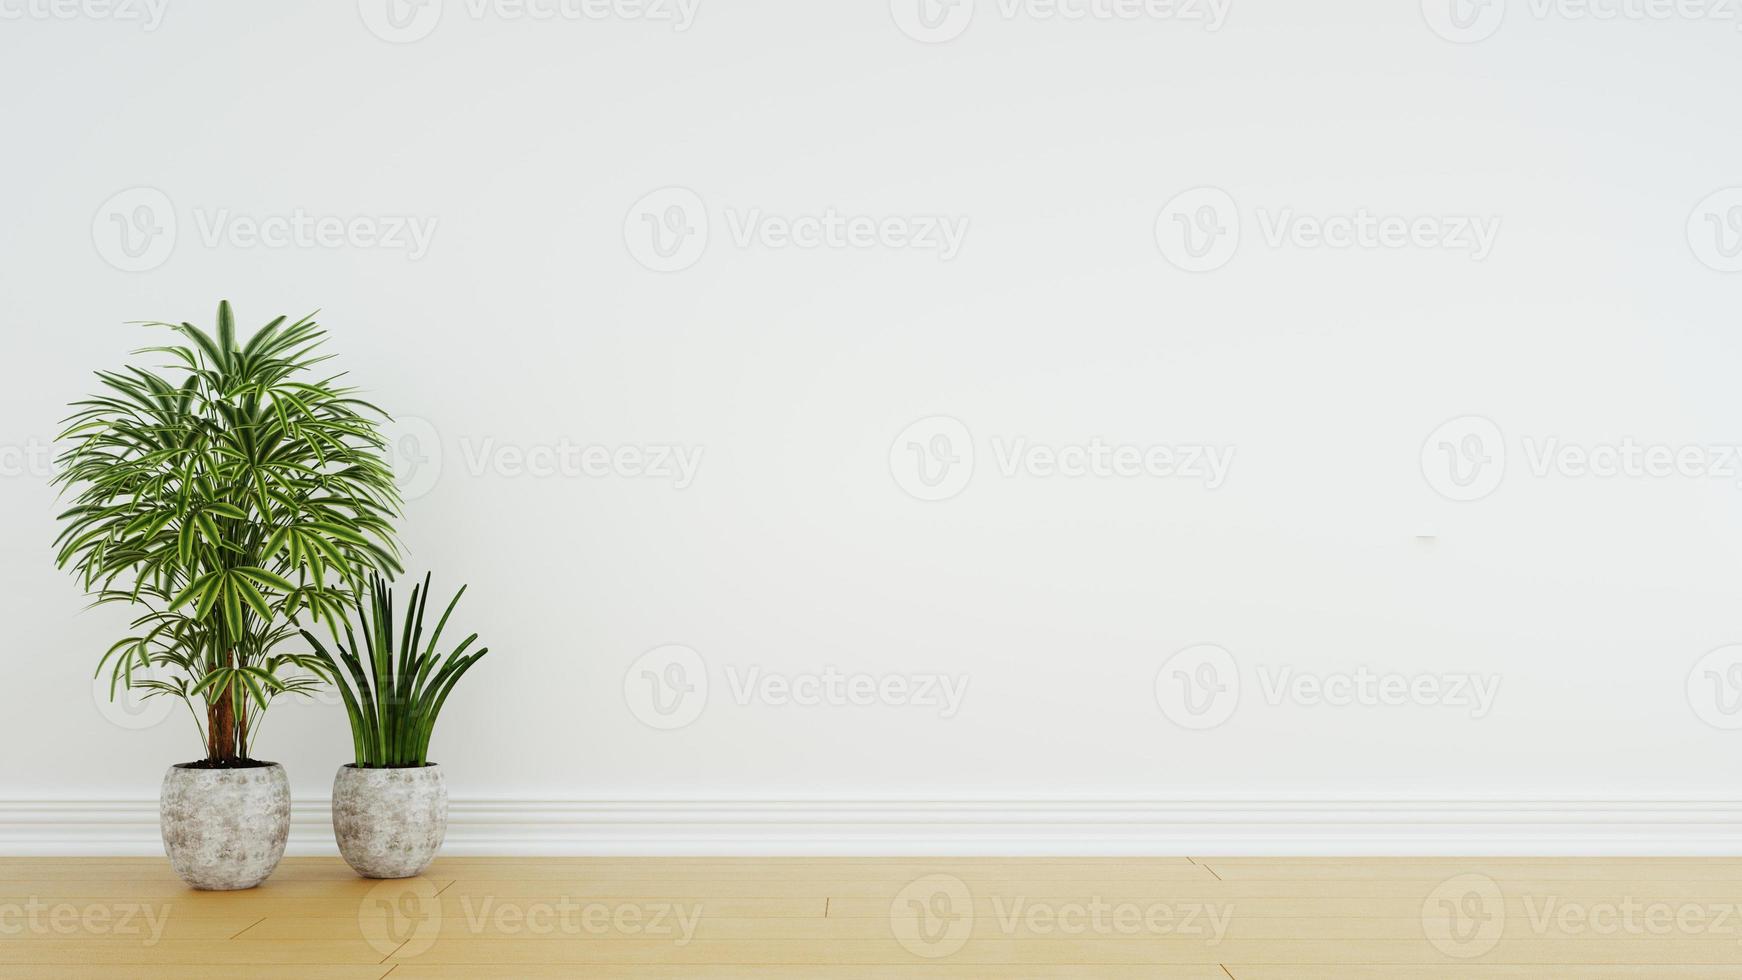 lege binnenkamer met witte muur en houten vloer 3d render foto